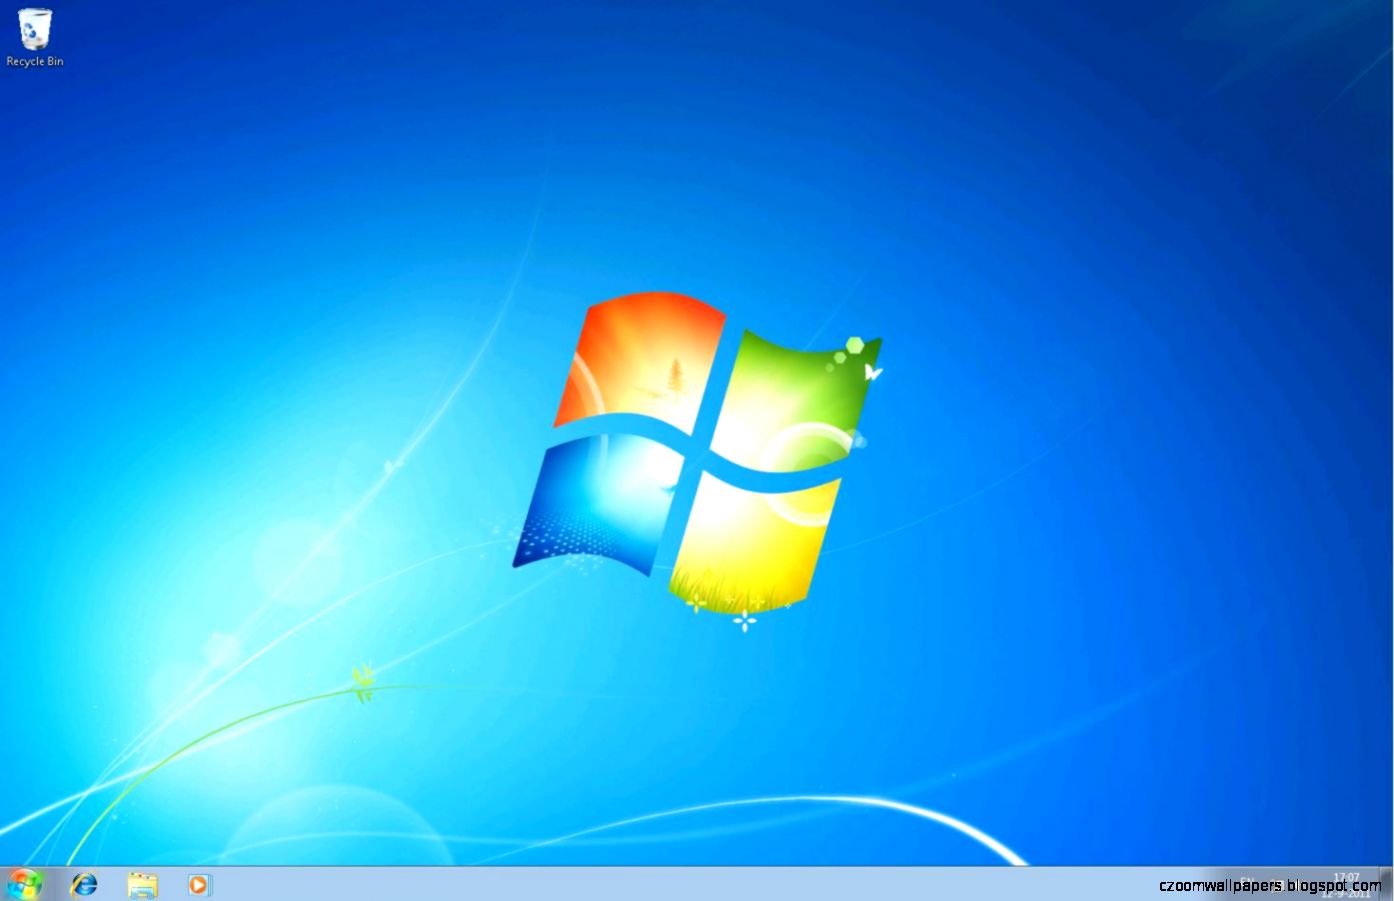 rss wallpaper,sistema operativo,icono de la computadora,programa de computadora,captura de pantalla,tecnología